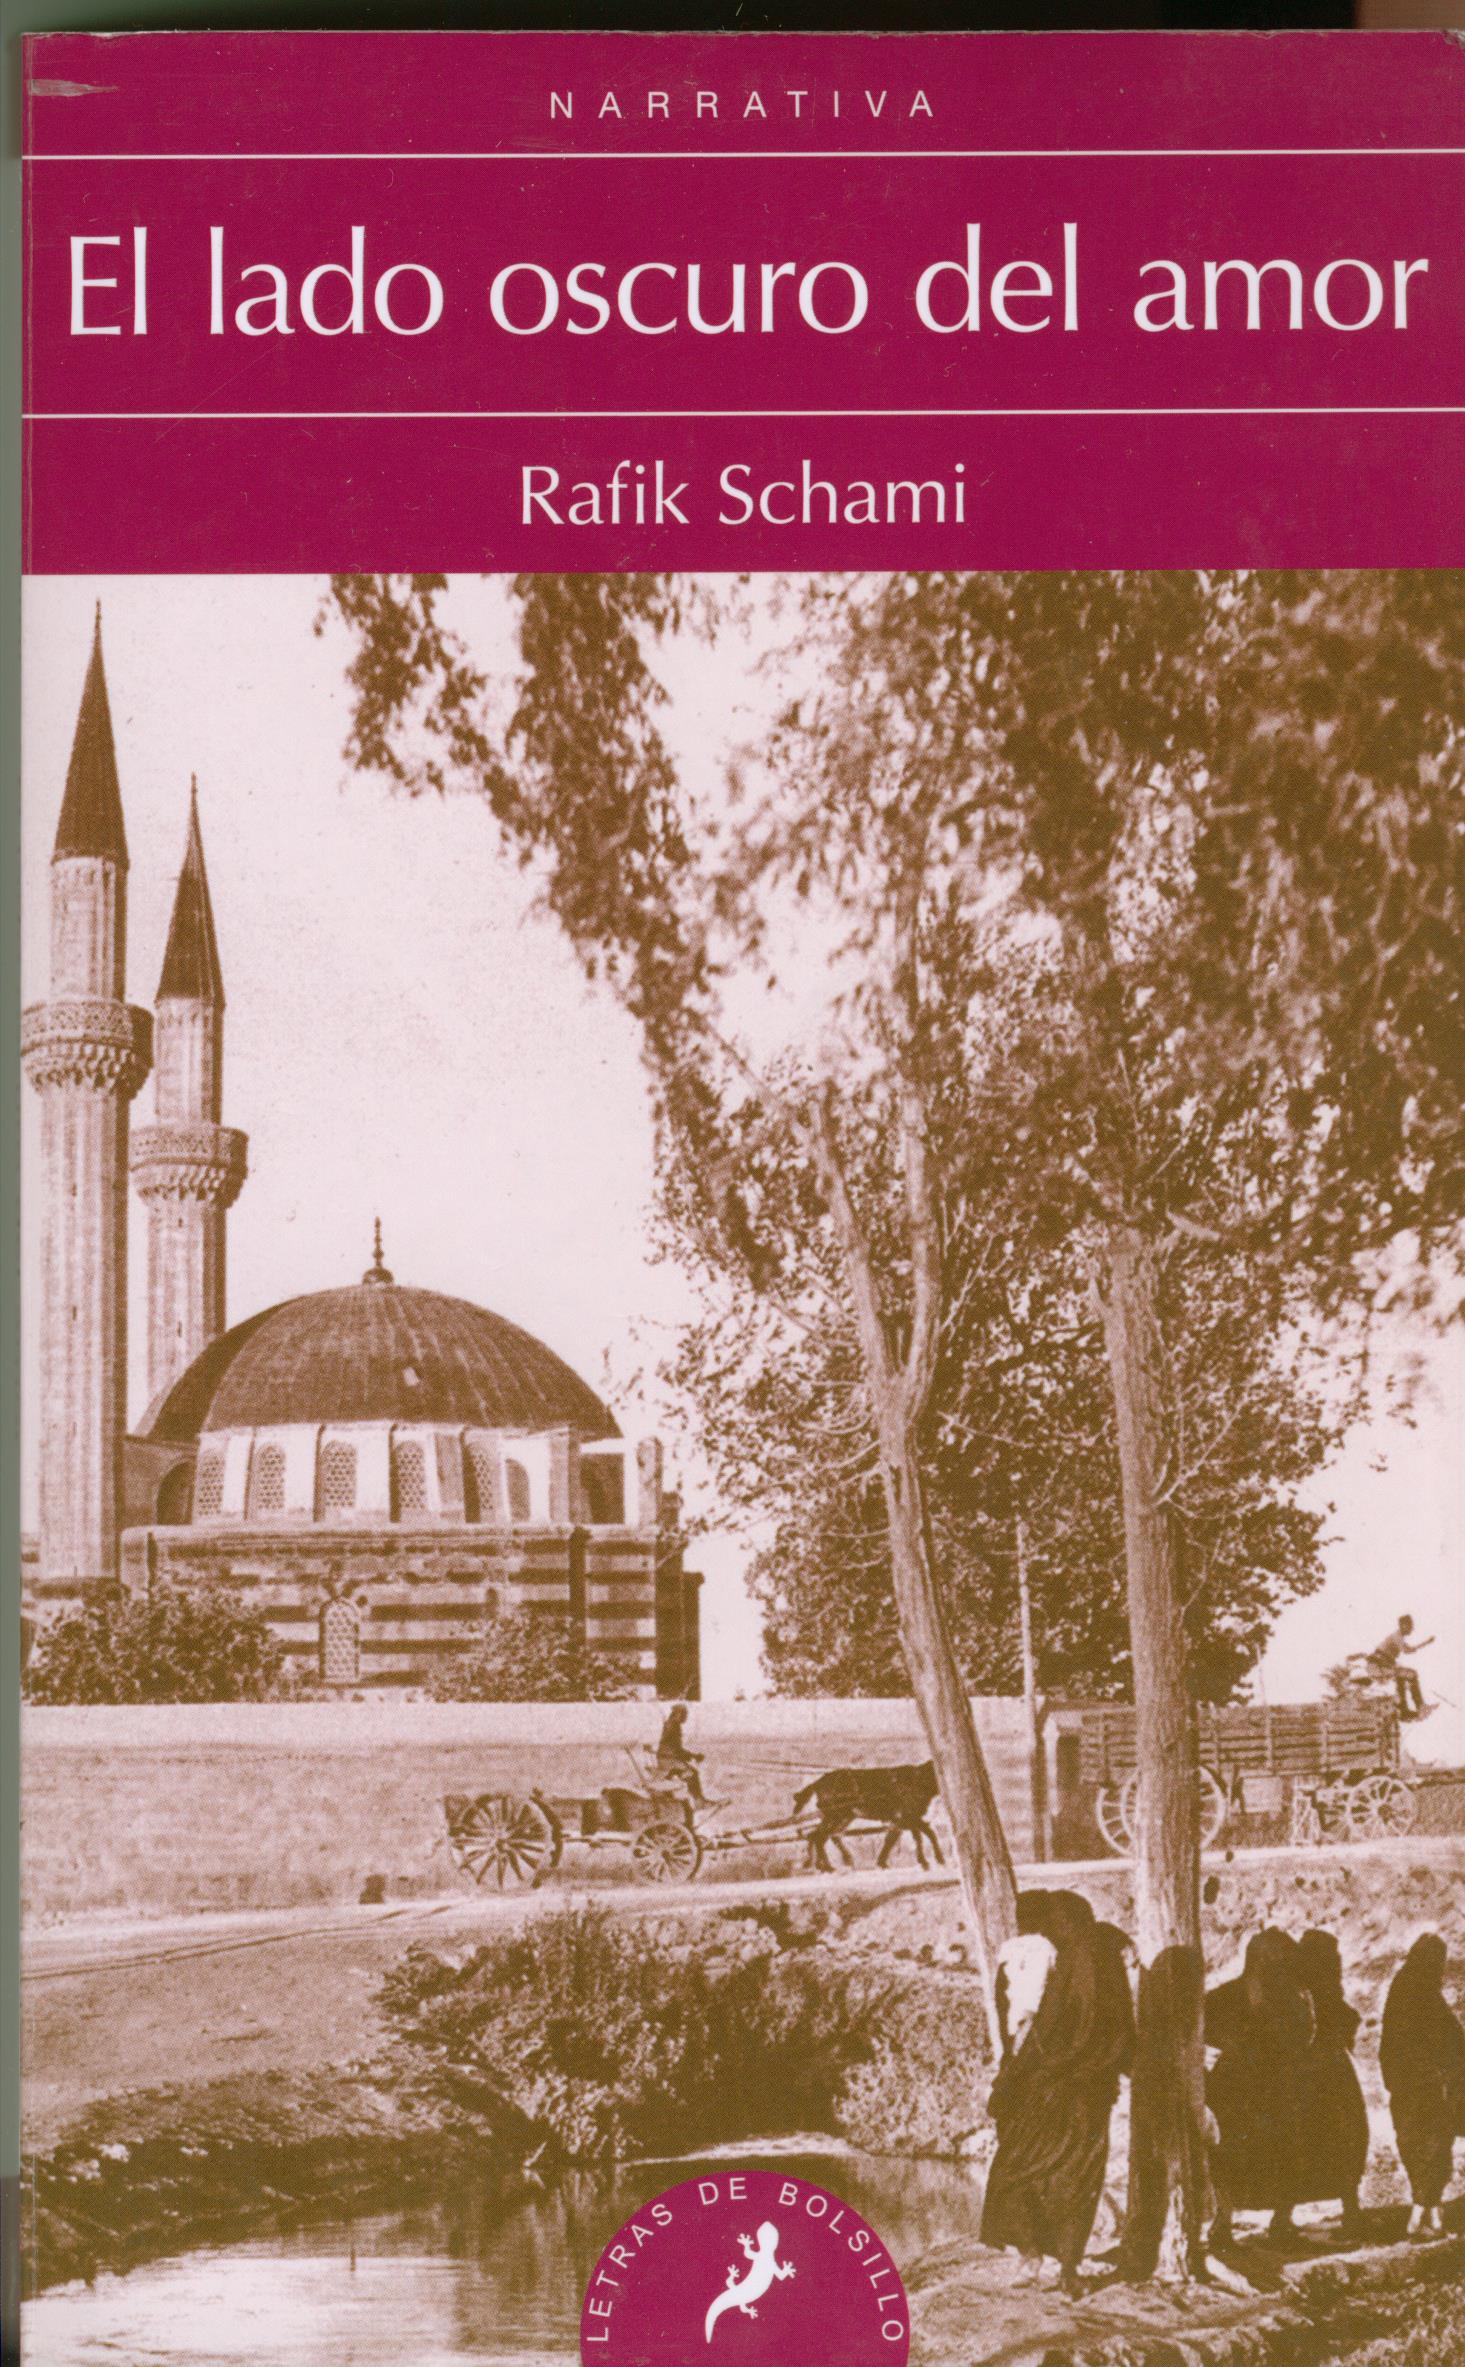 portada de novela de Rafik Schami